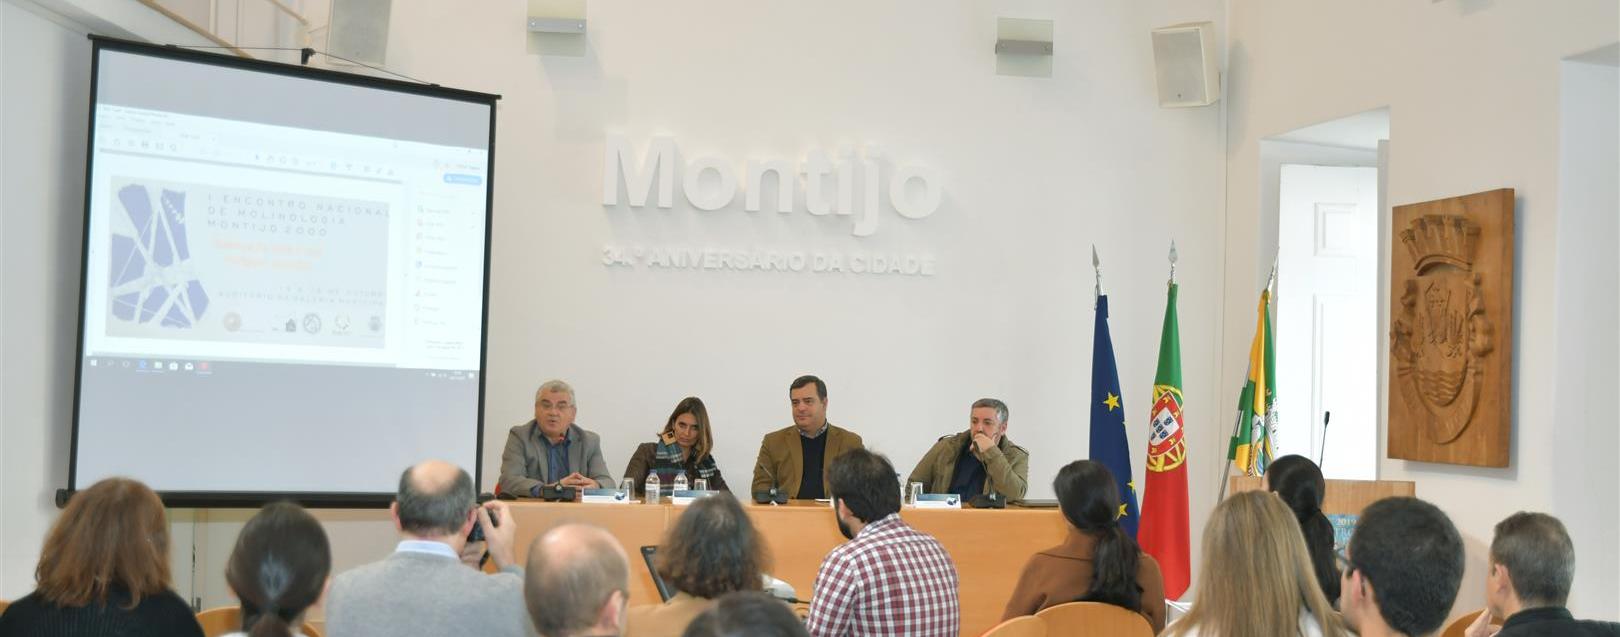 Montijo recebeu Encontro de Molinologia